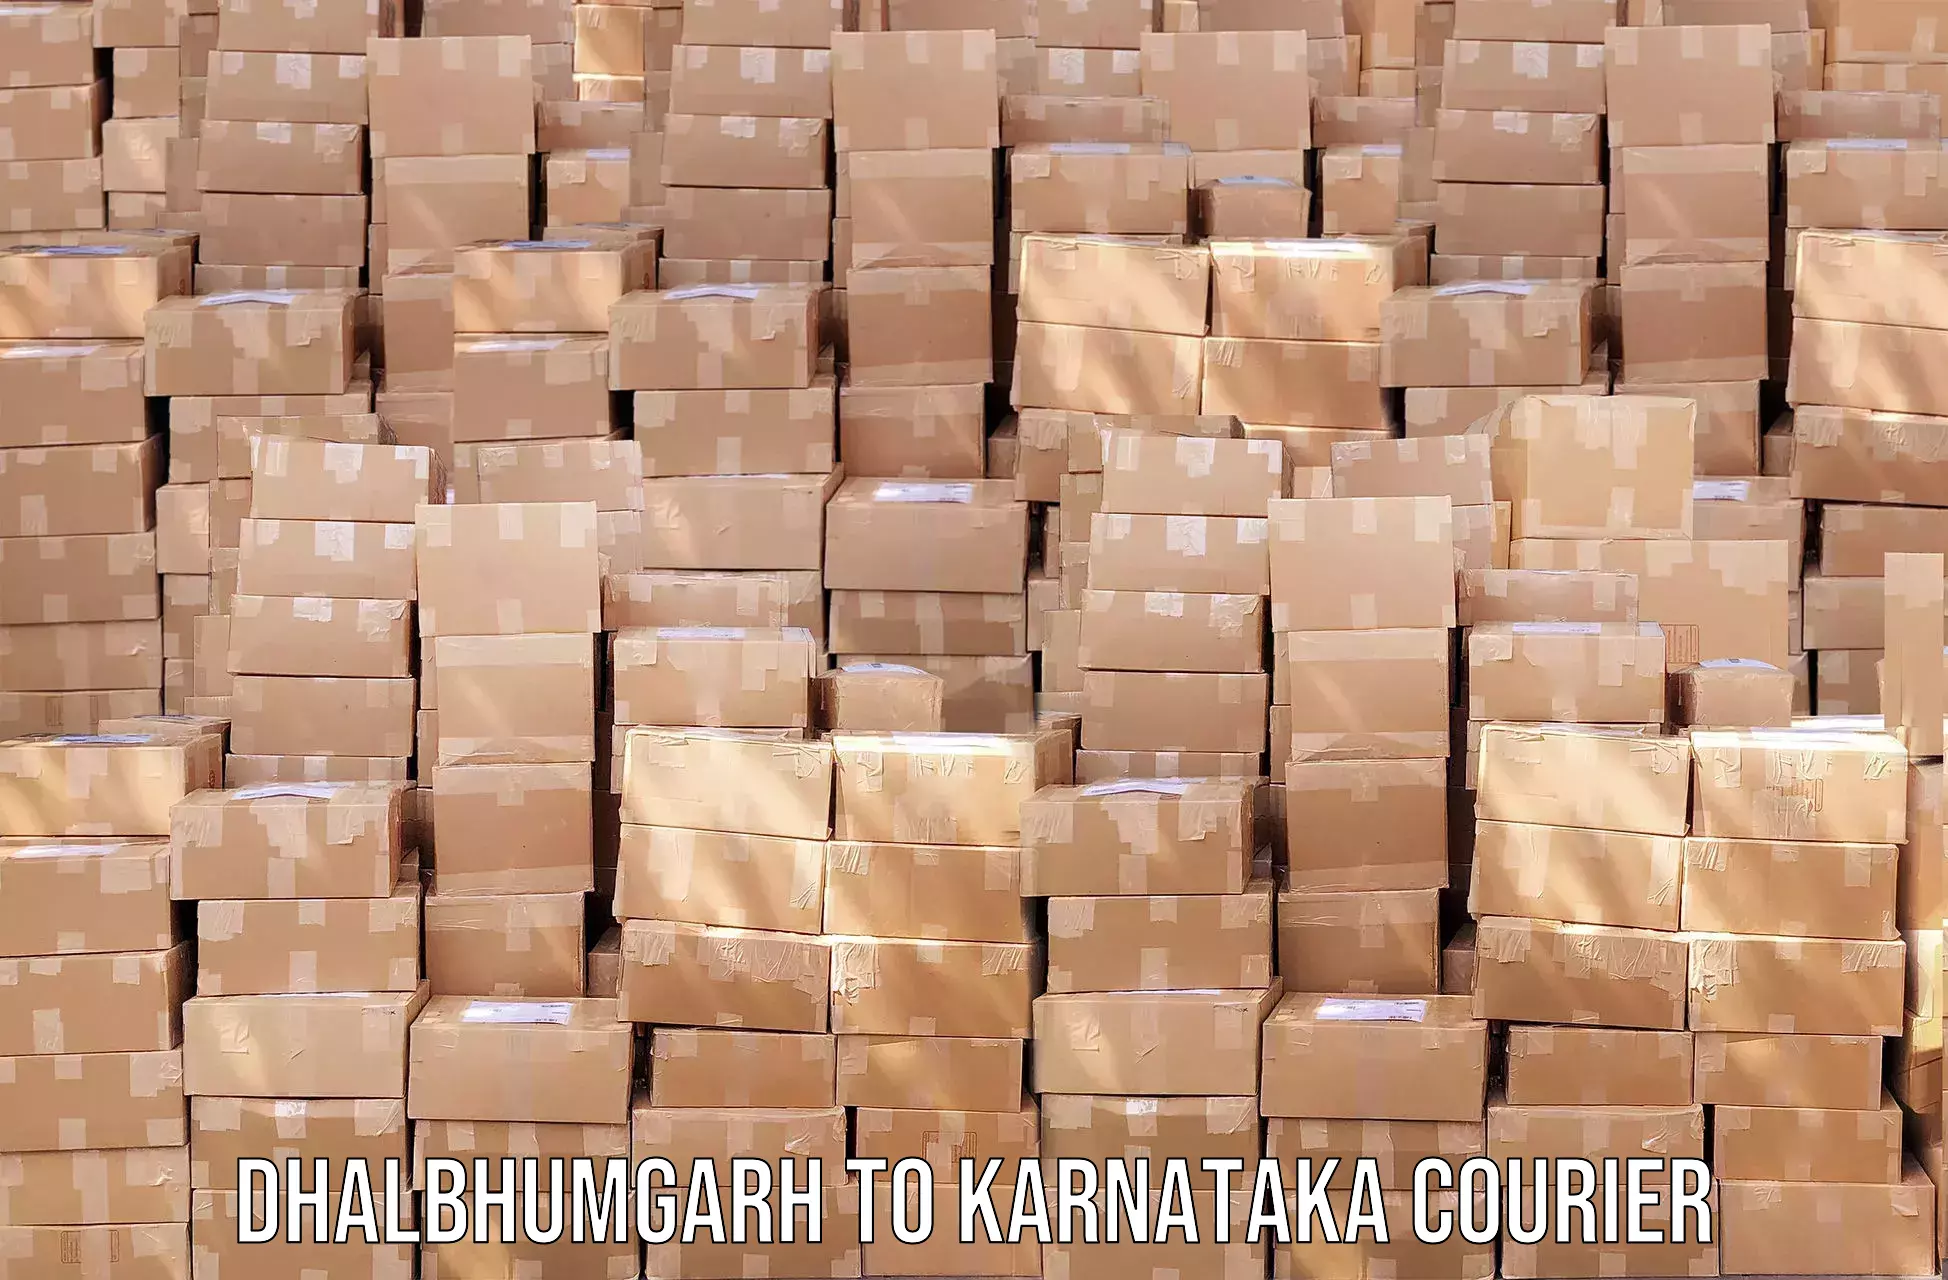 Efficient shipping operations Dhalbhumgarh to Karnataka